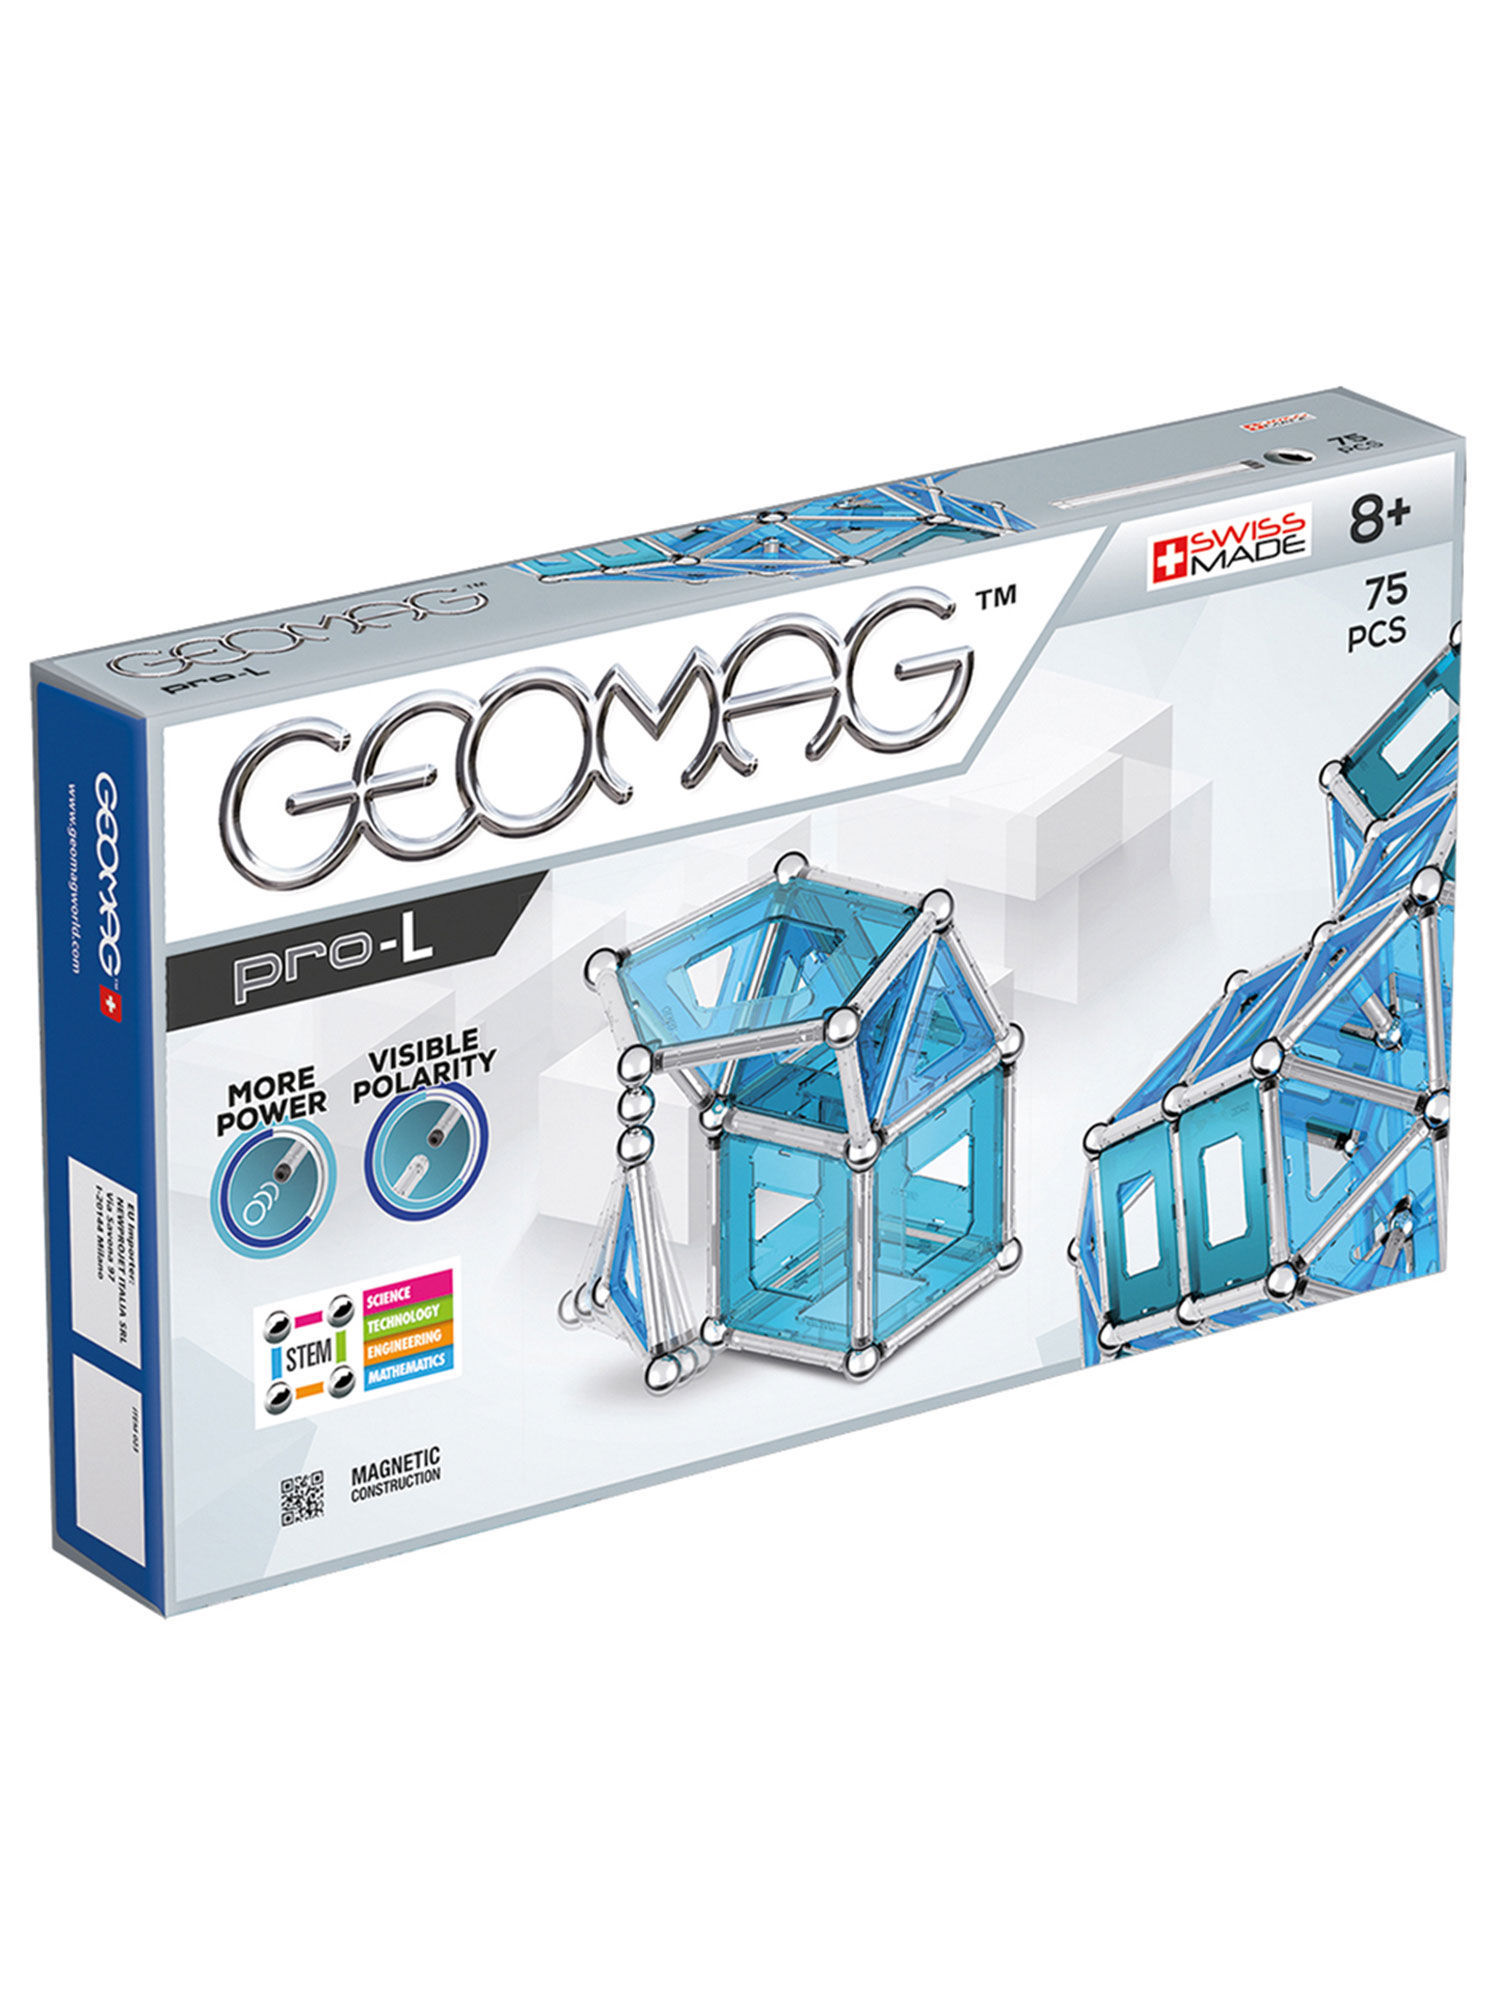 Geomag Magnetic Toys Pro-l - 75 Pieces - Multi-Color